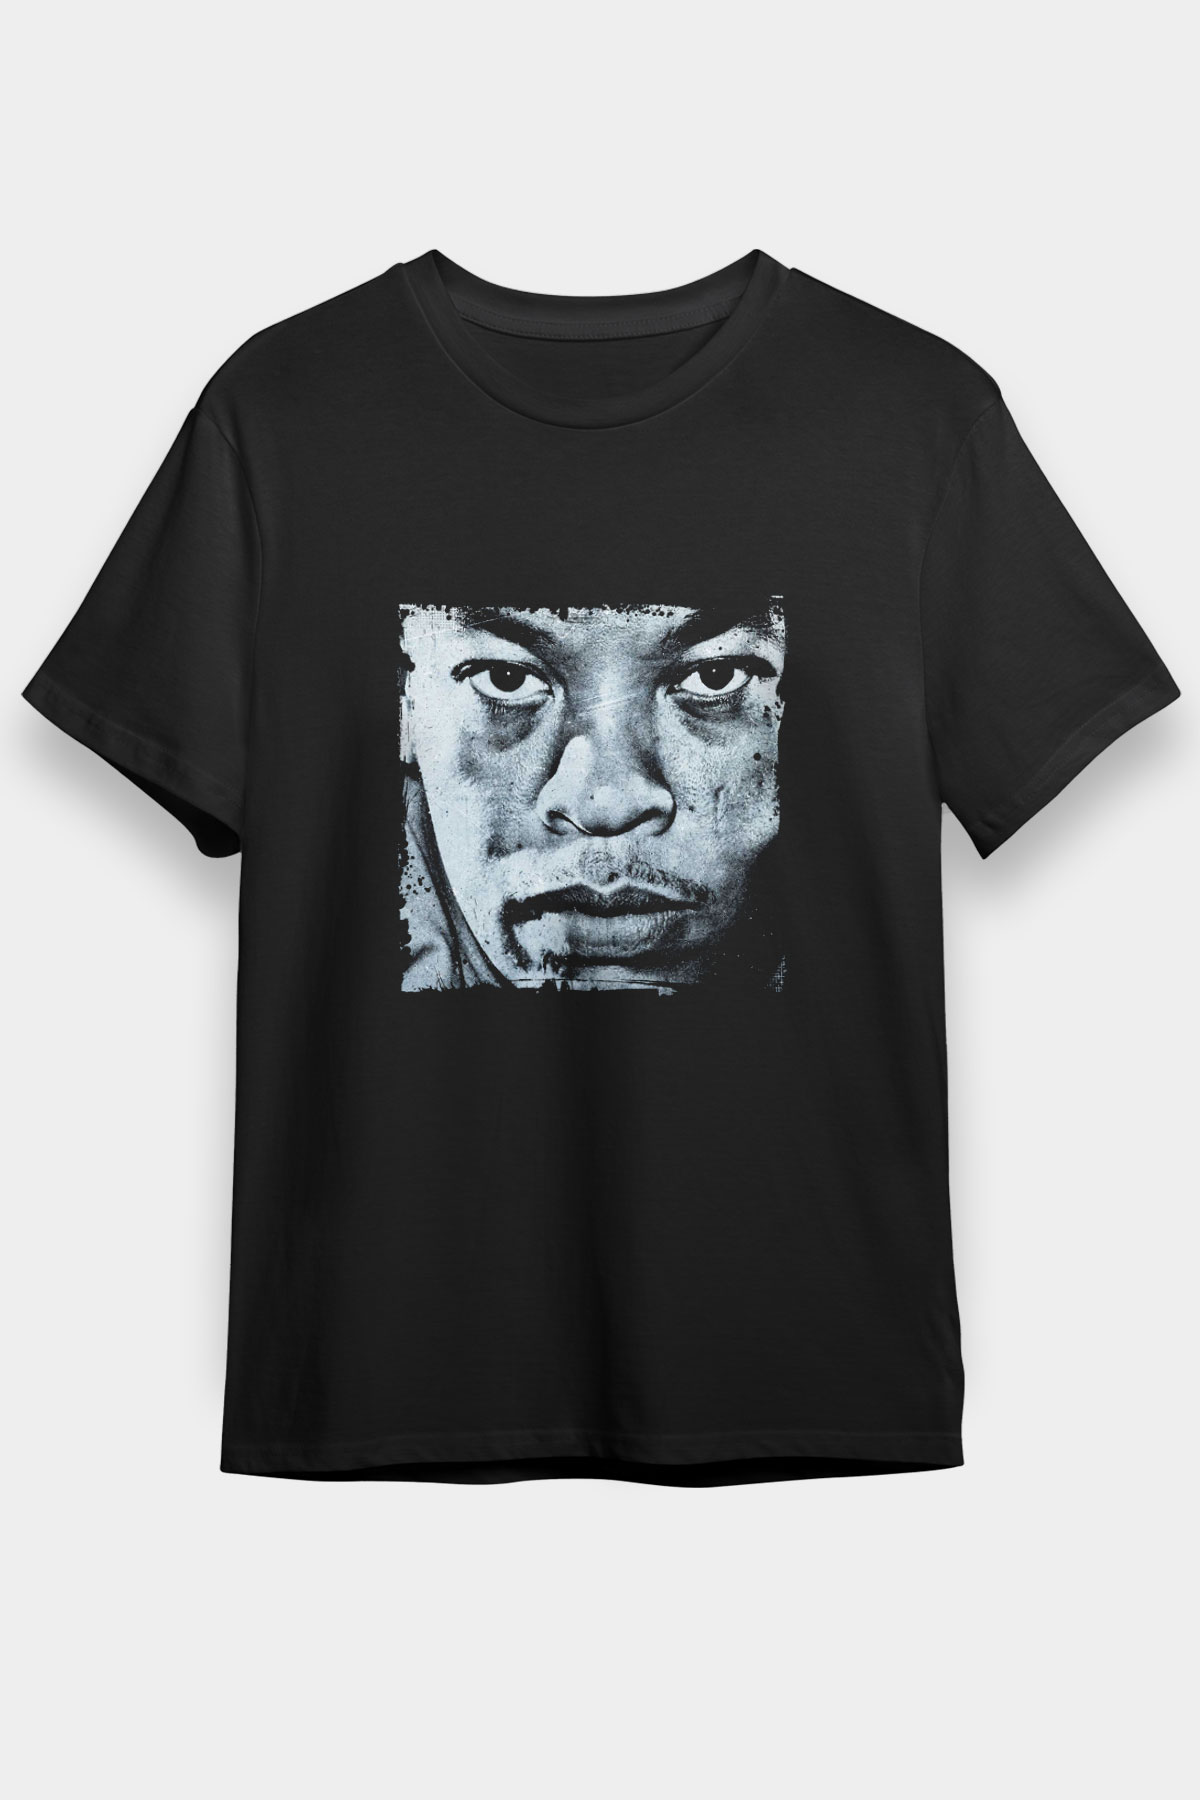 Dr.Dre T shirt,Hip Hop,Rap Tshirt 07/